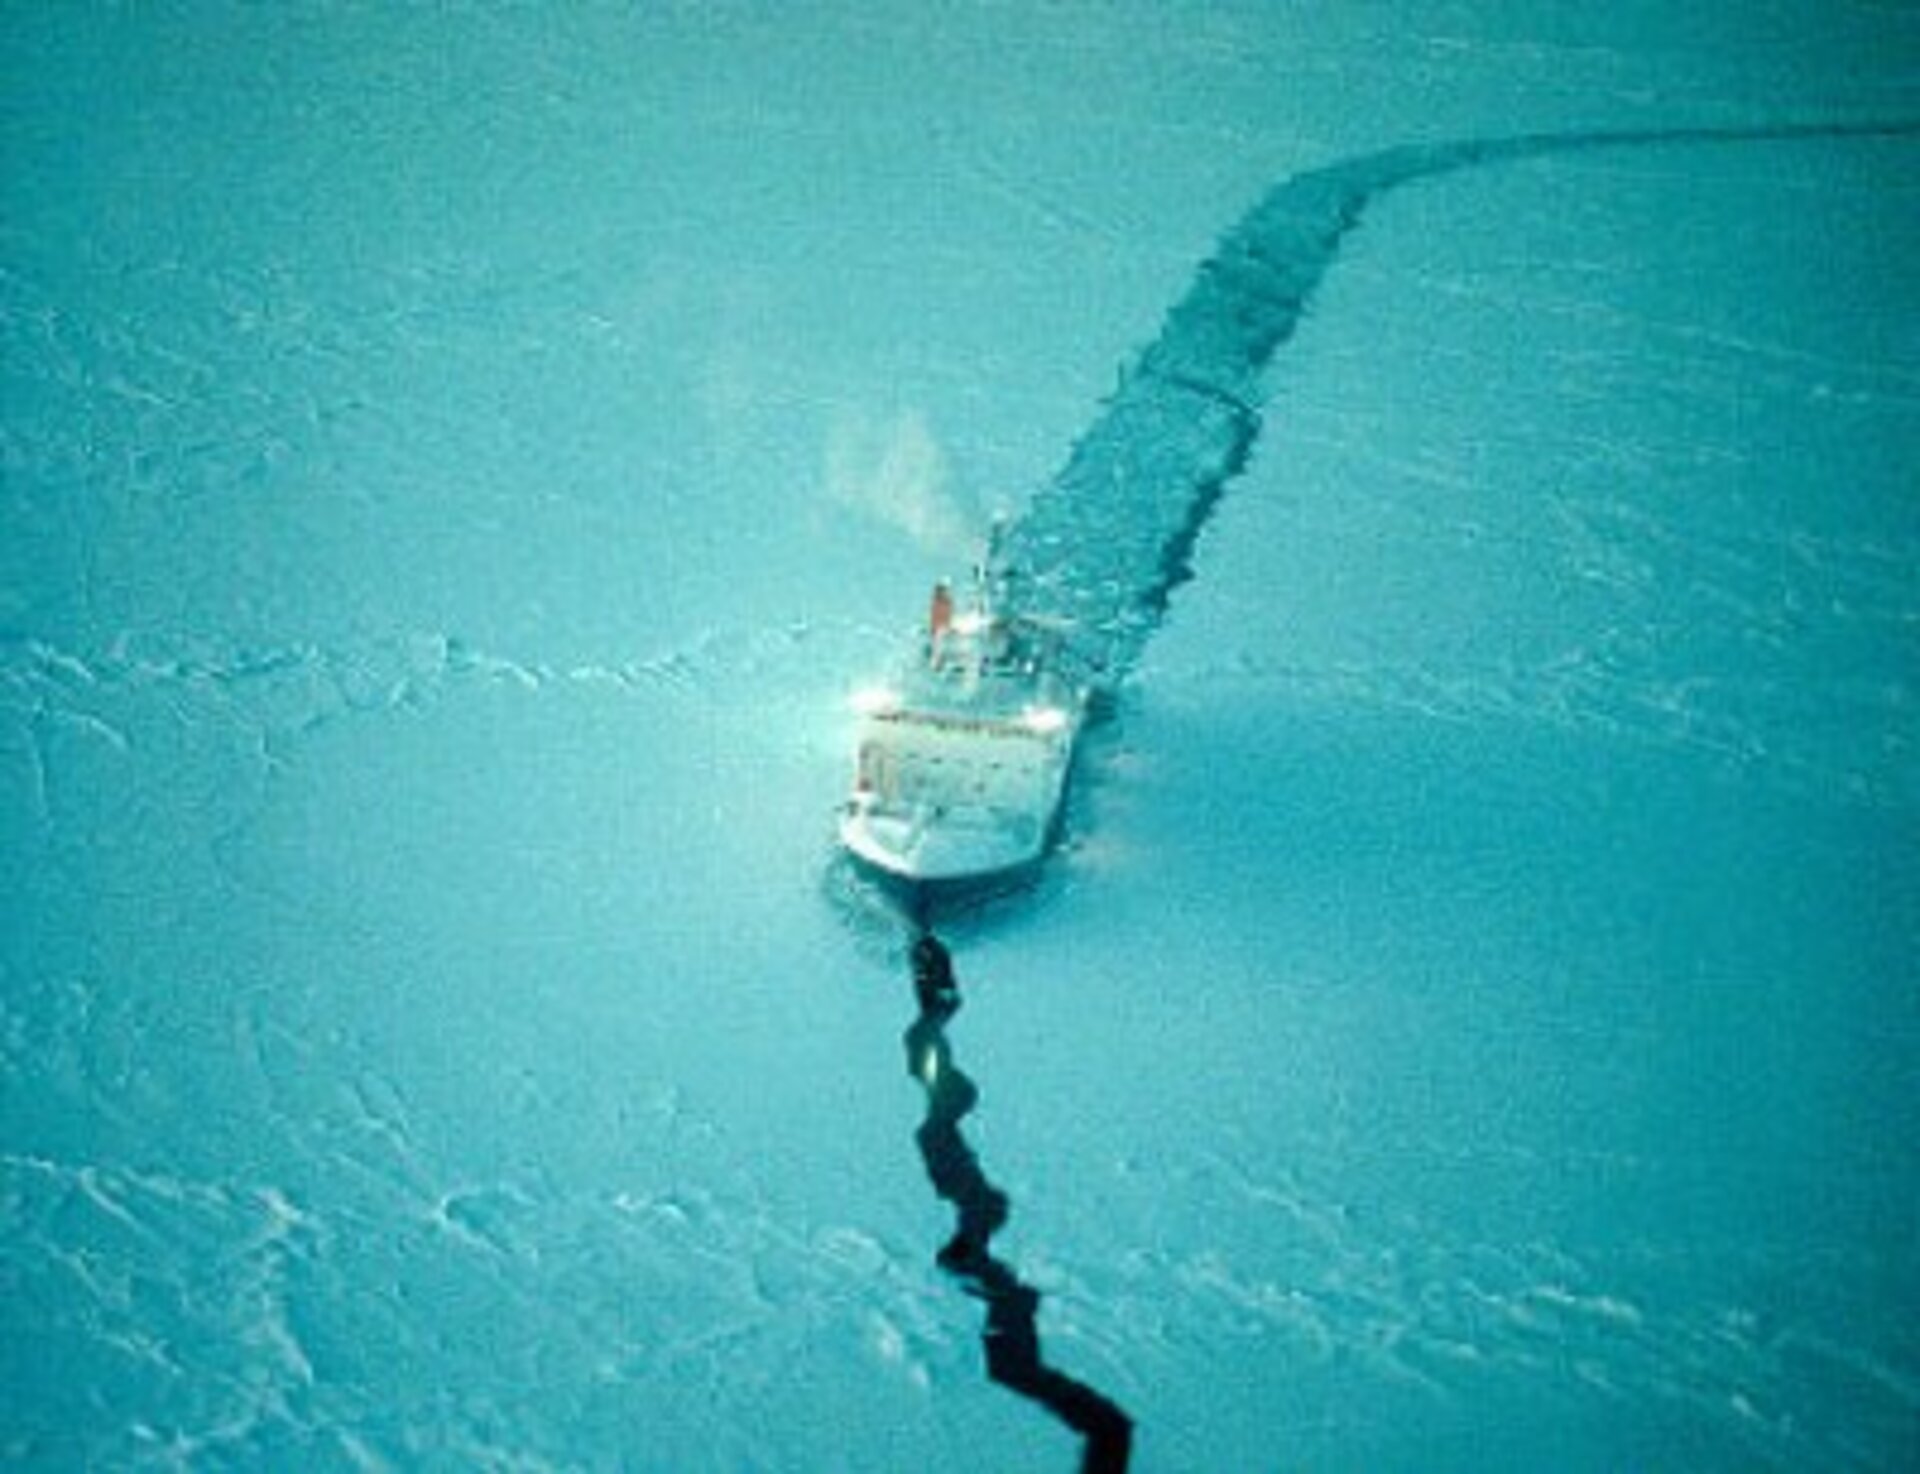 German ice-breaker RV Polarstern